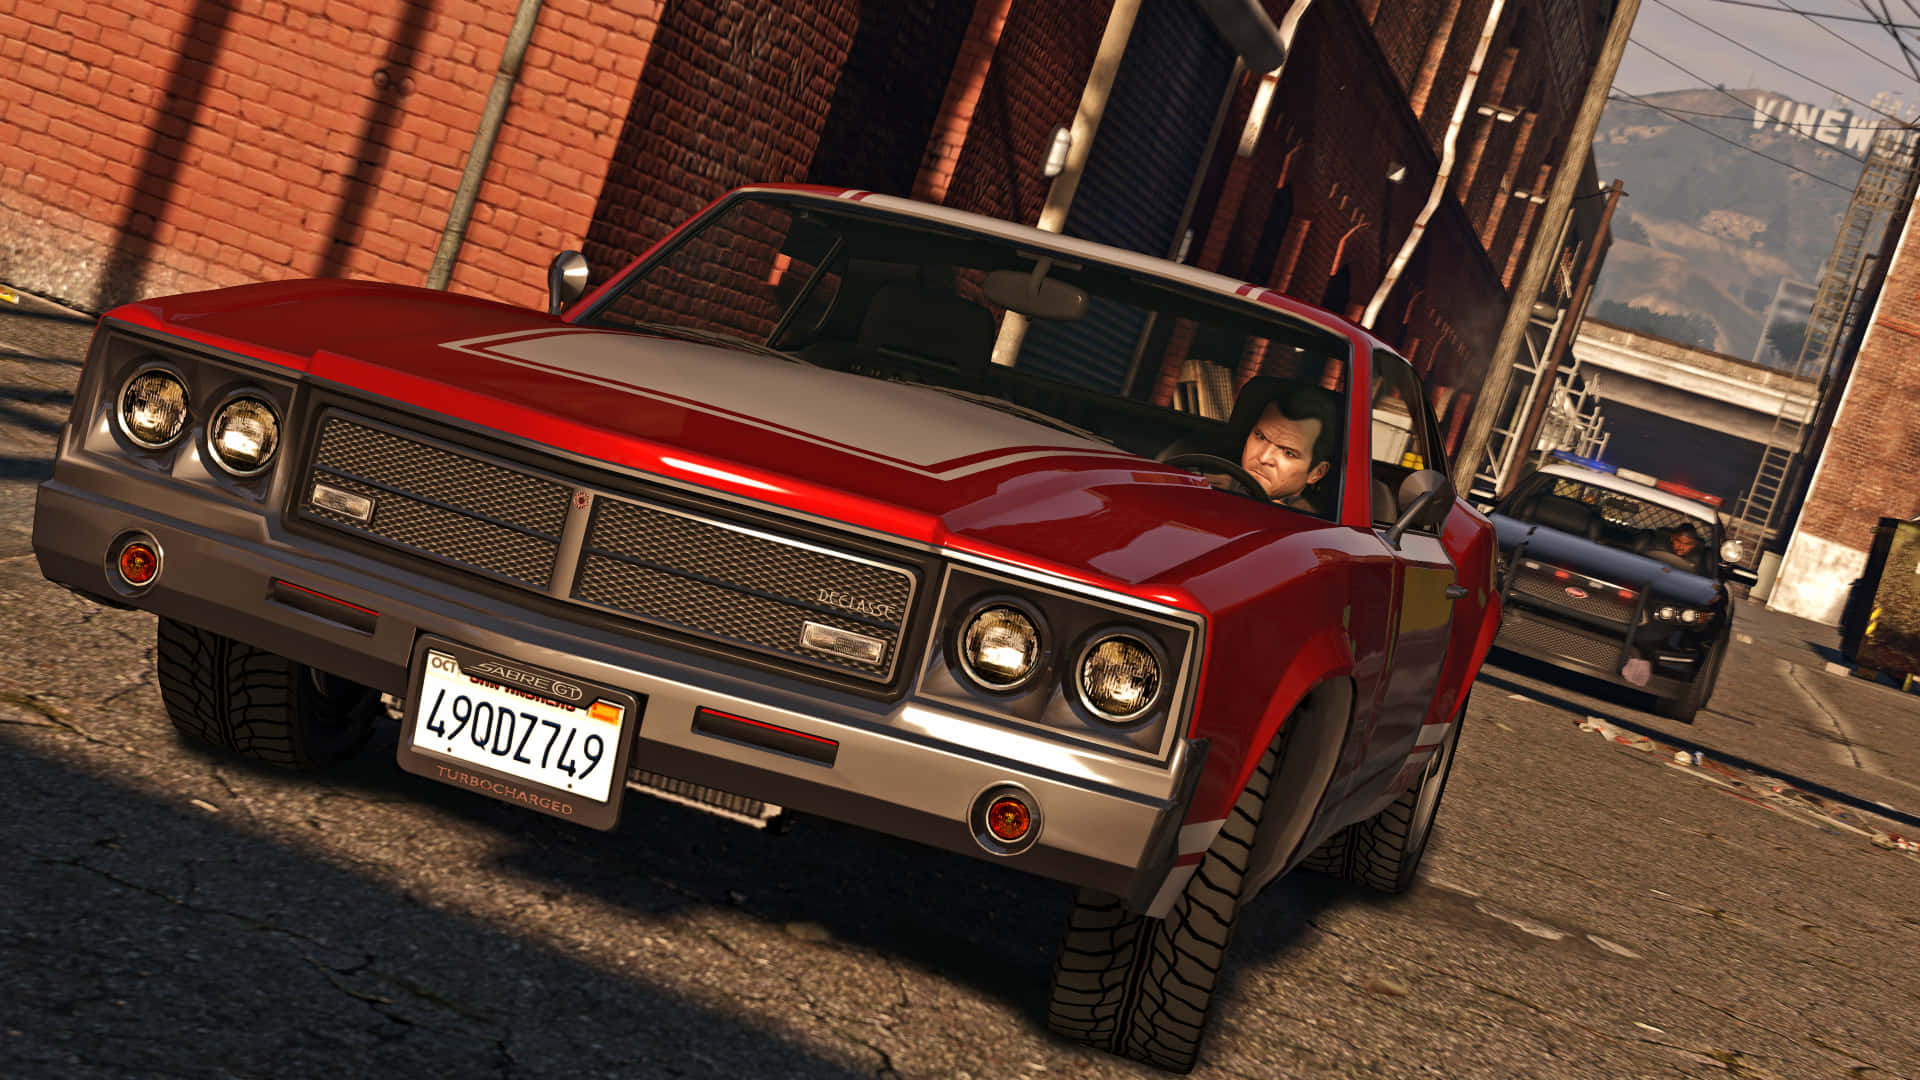 1920x1080 Grand Theft Auto V Background 1920 X 1080 Background